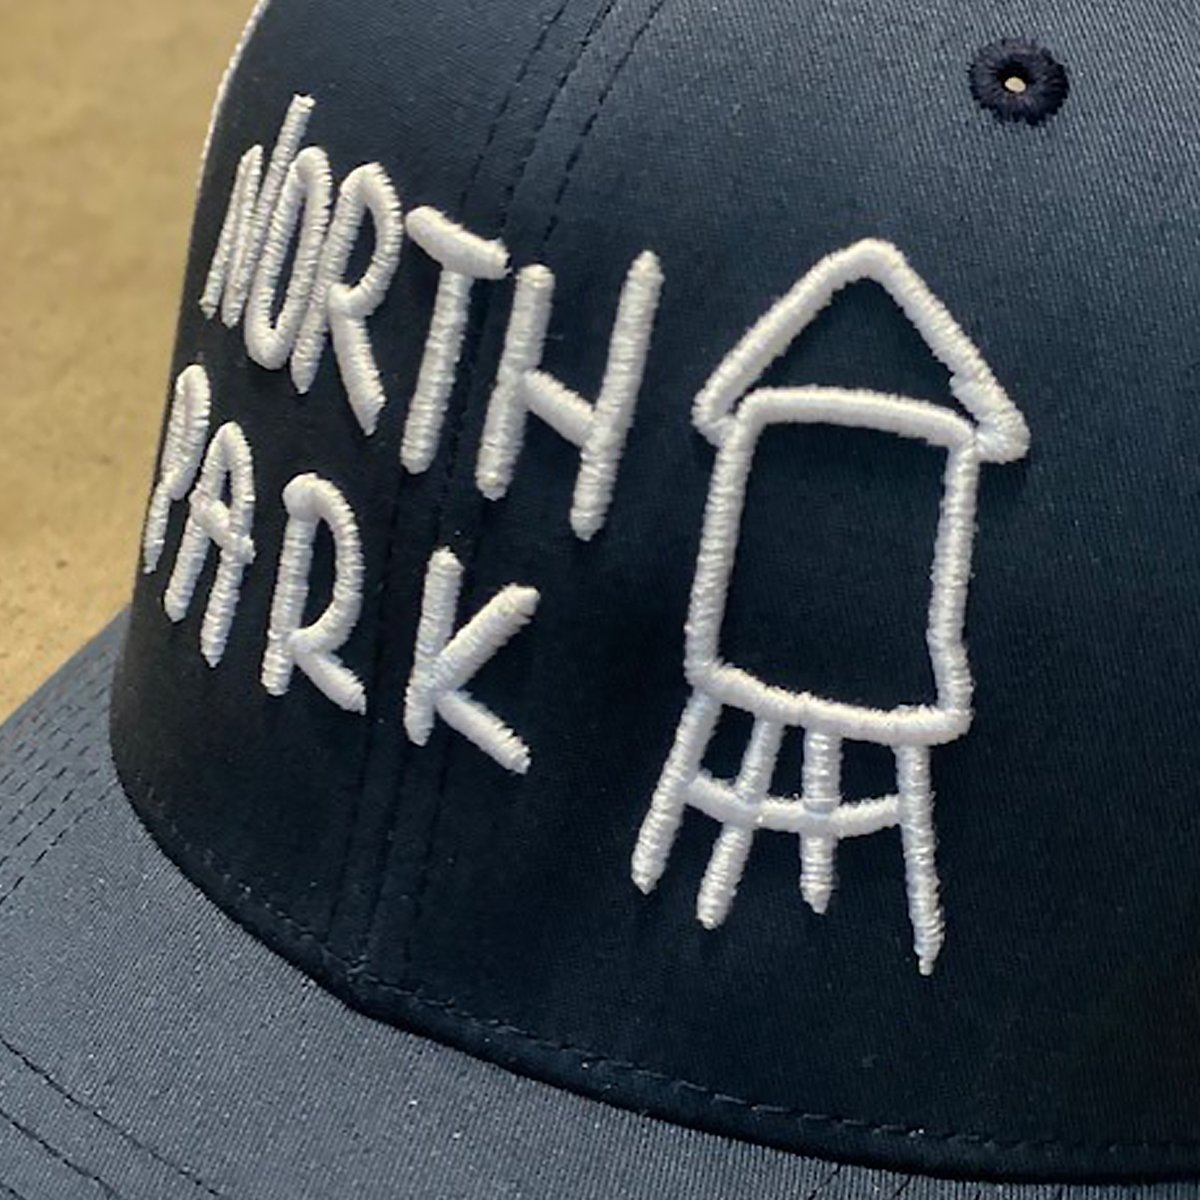 Sketchy North Park Mesh Trucker Cap - [aka]